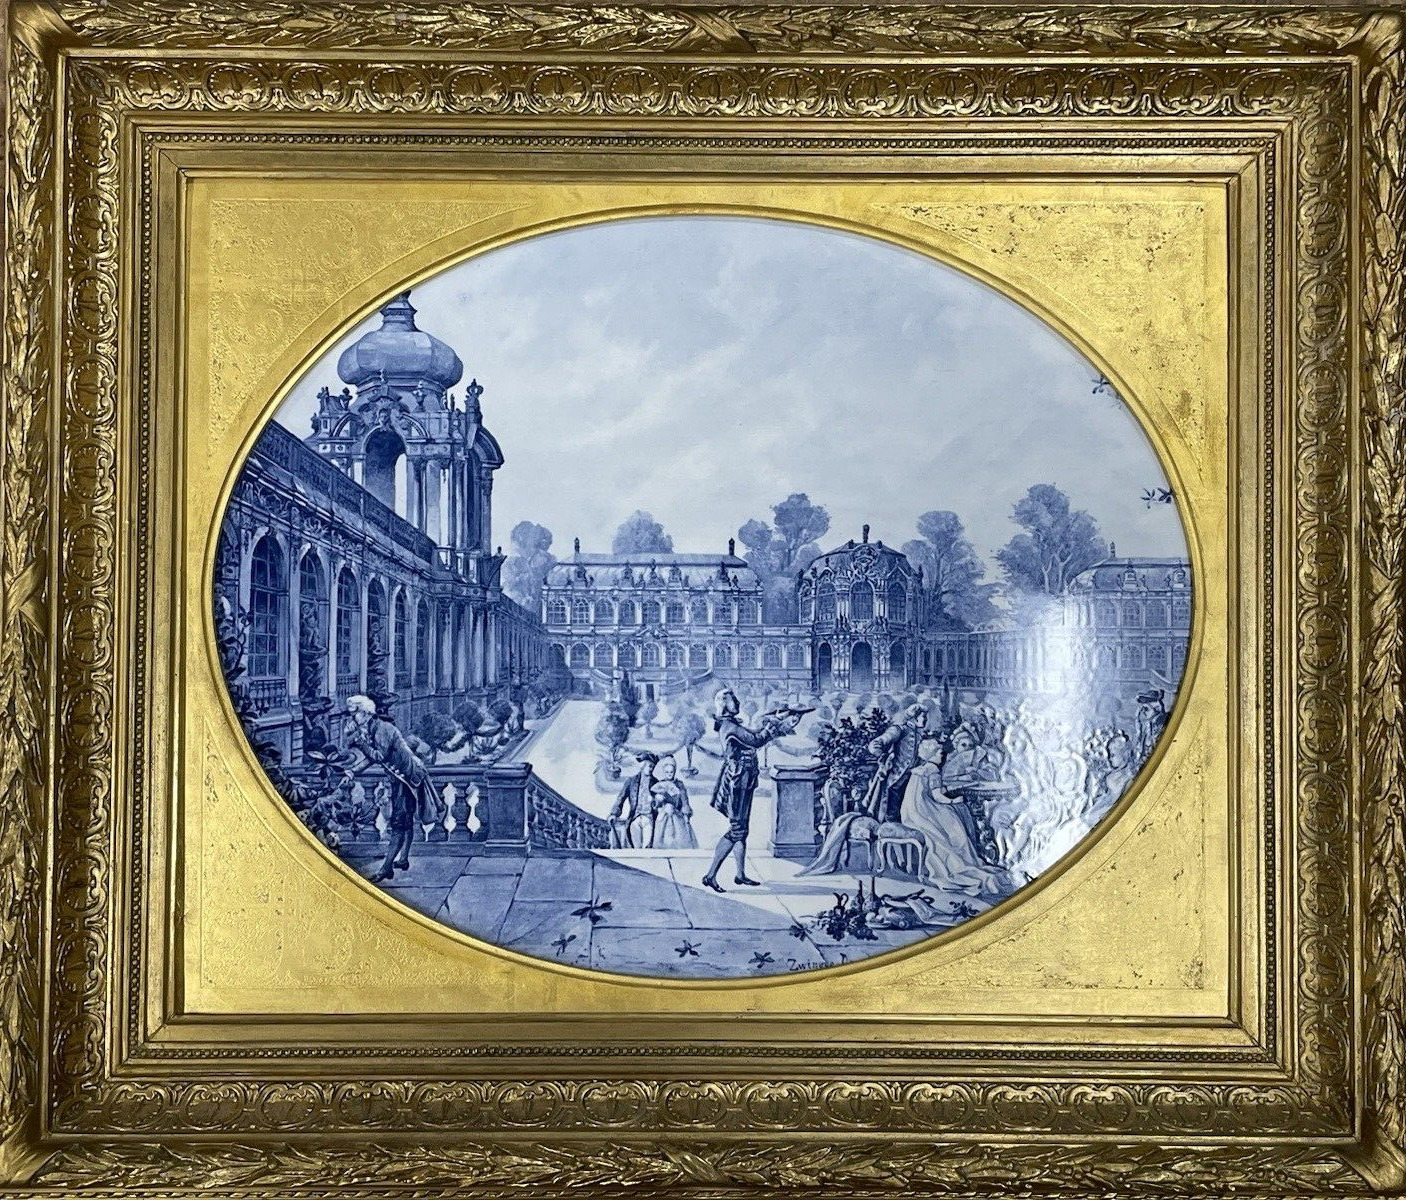 Large Framed Blue & White Porcelain Plaque of Zwinger Palace, Dresden Germany